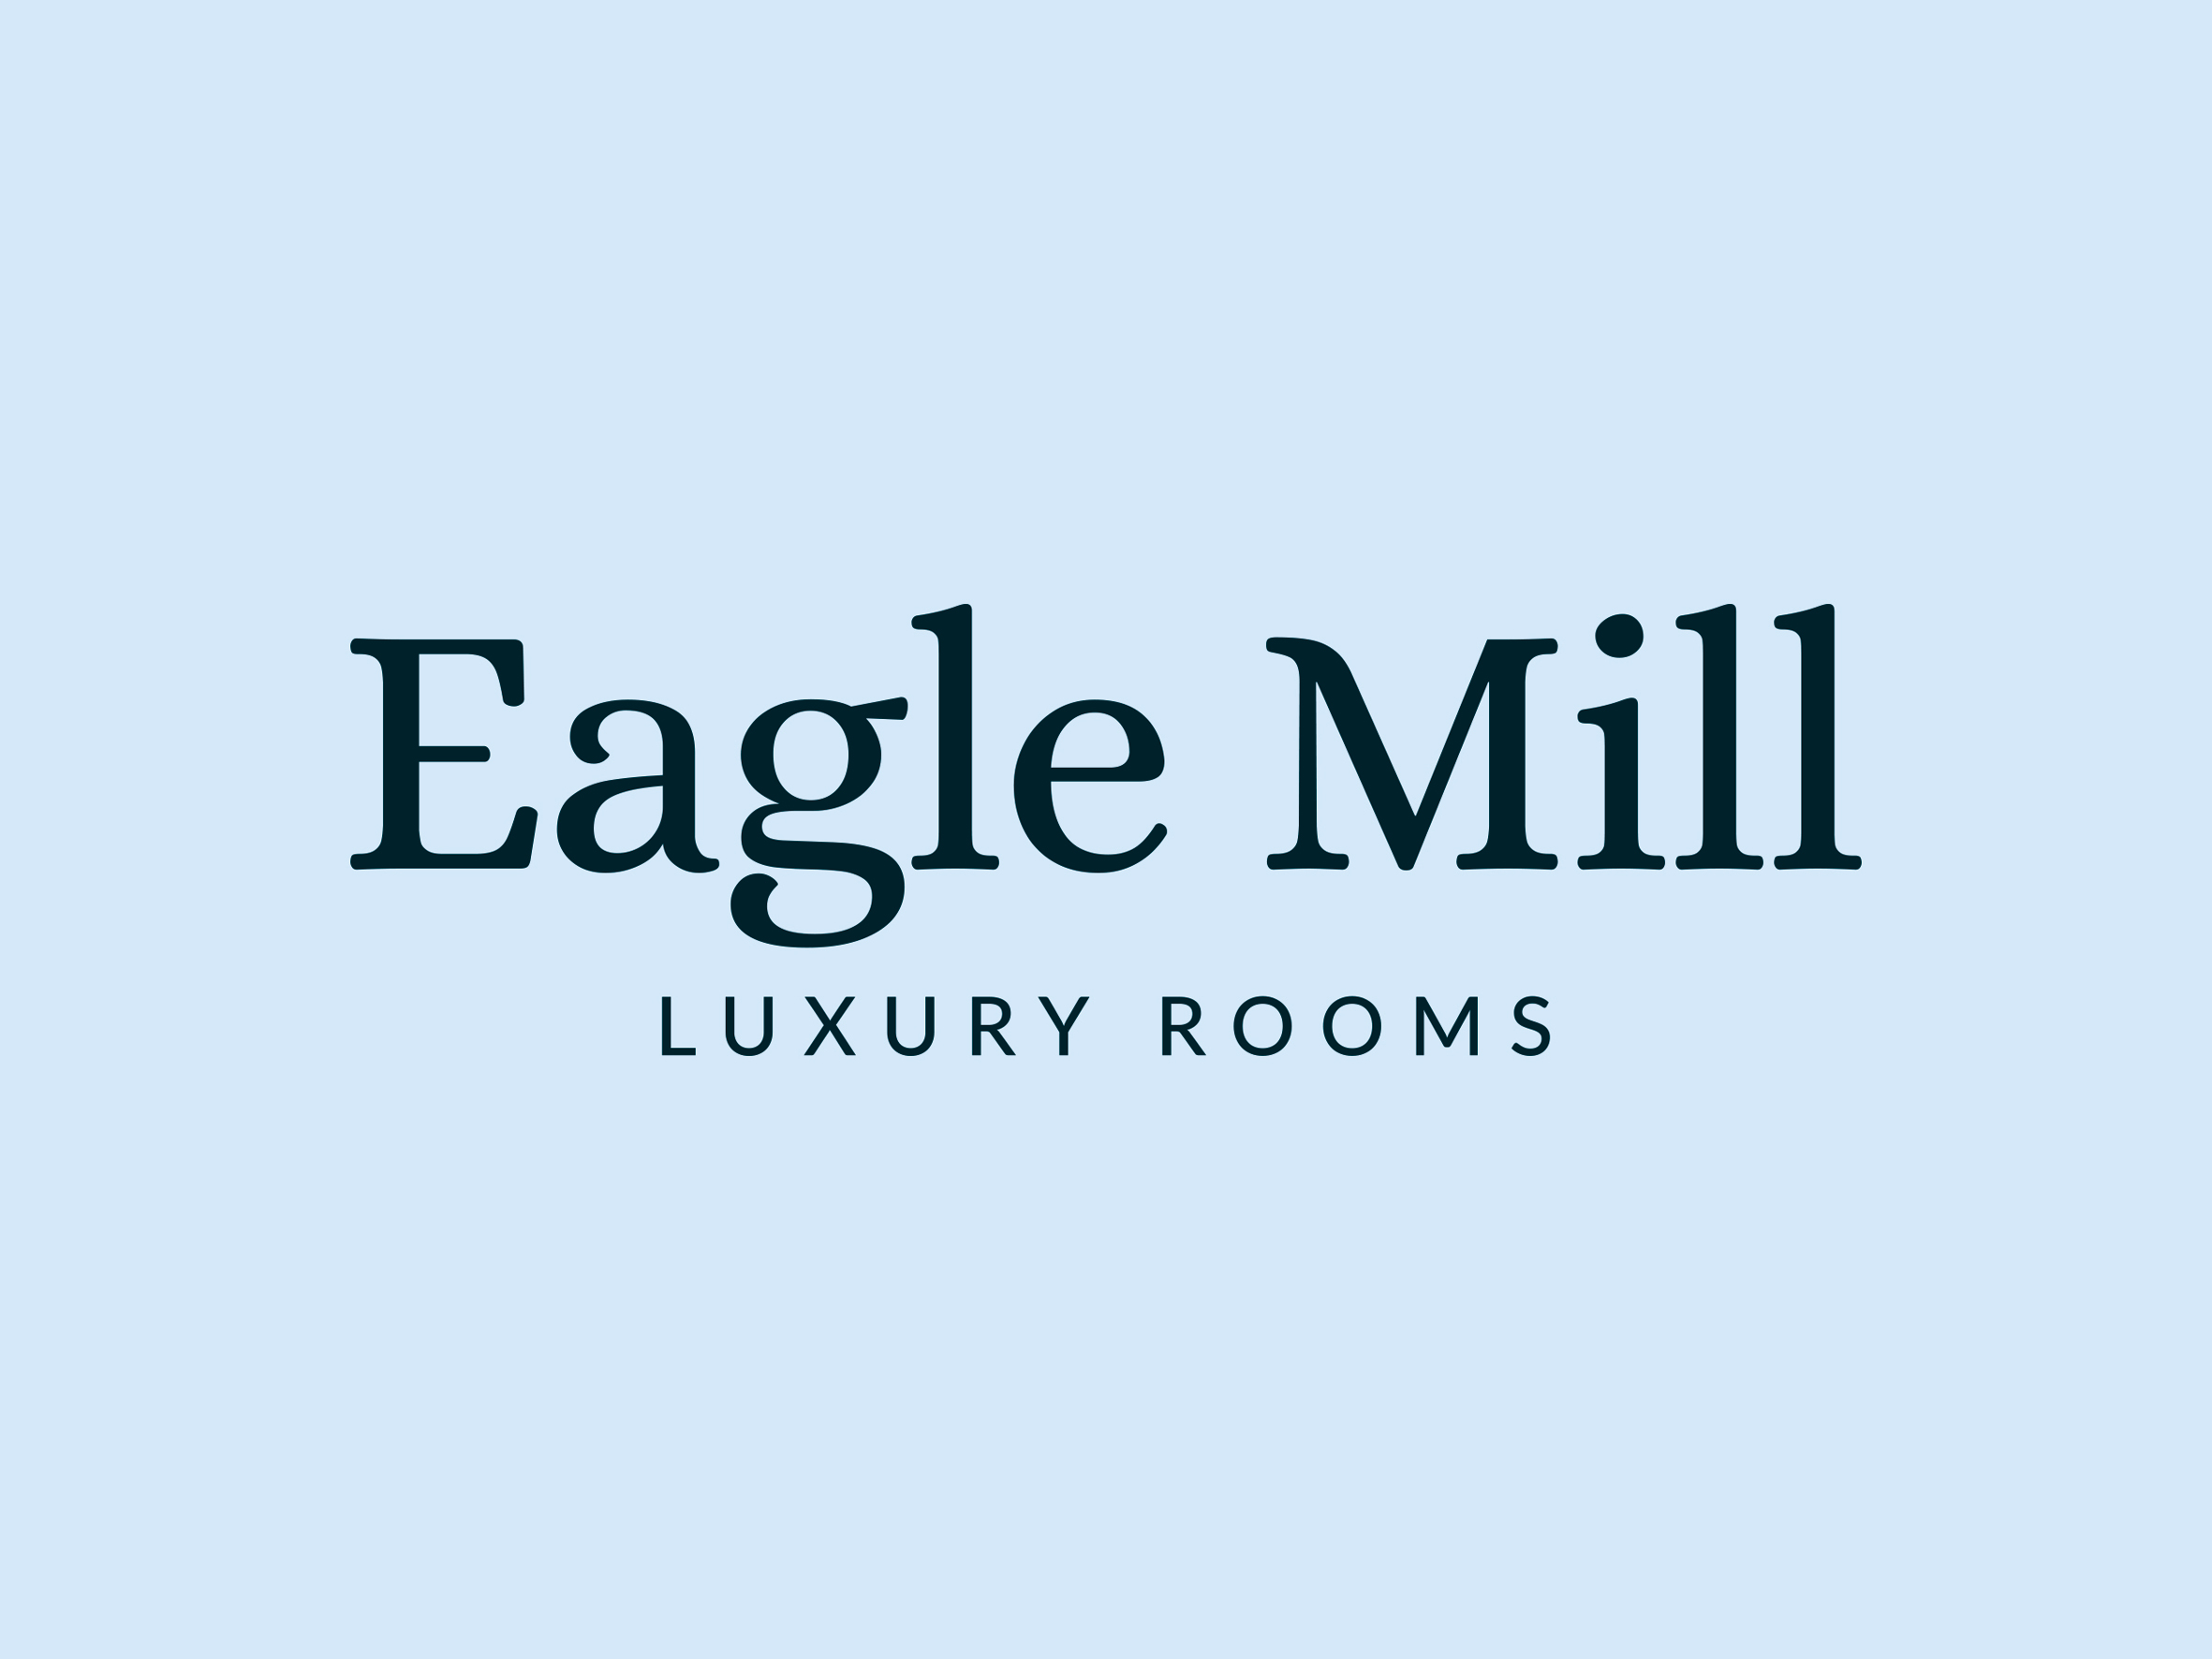 Eagle Mill Luxury Rooms logo